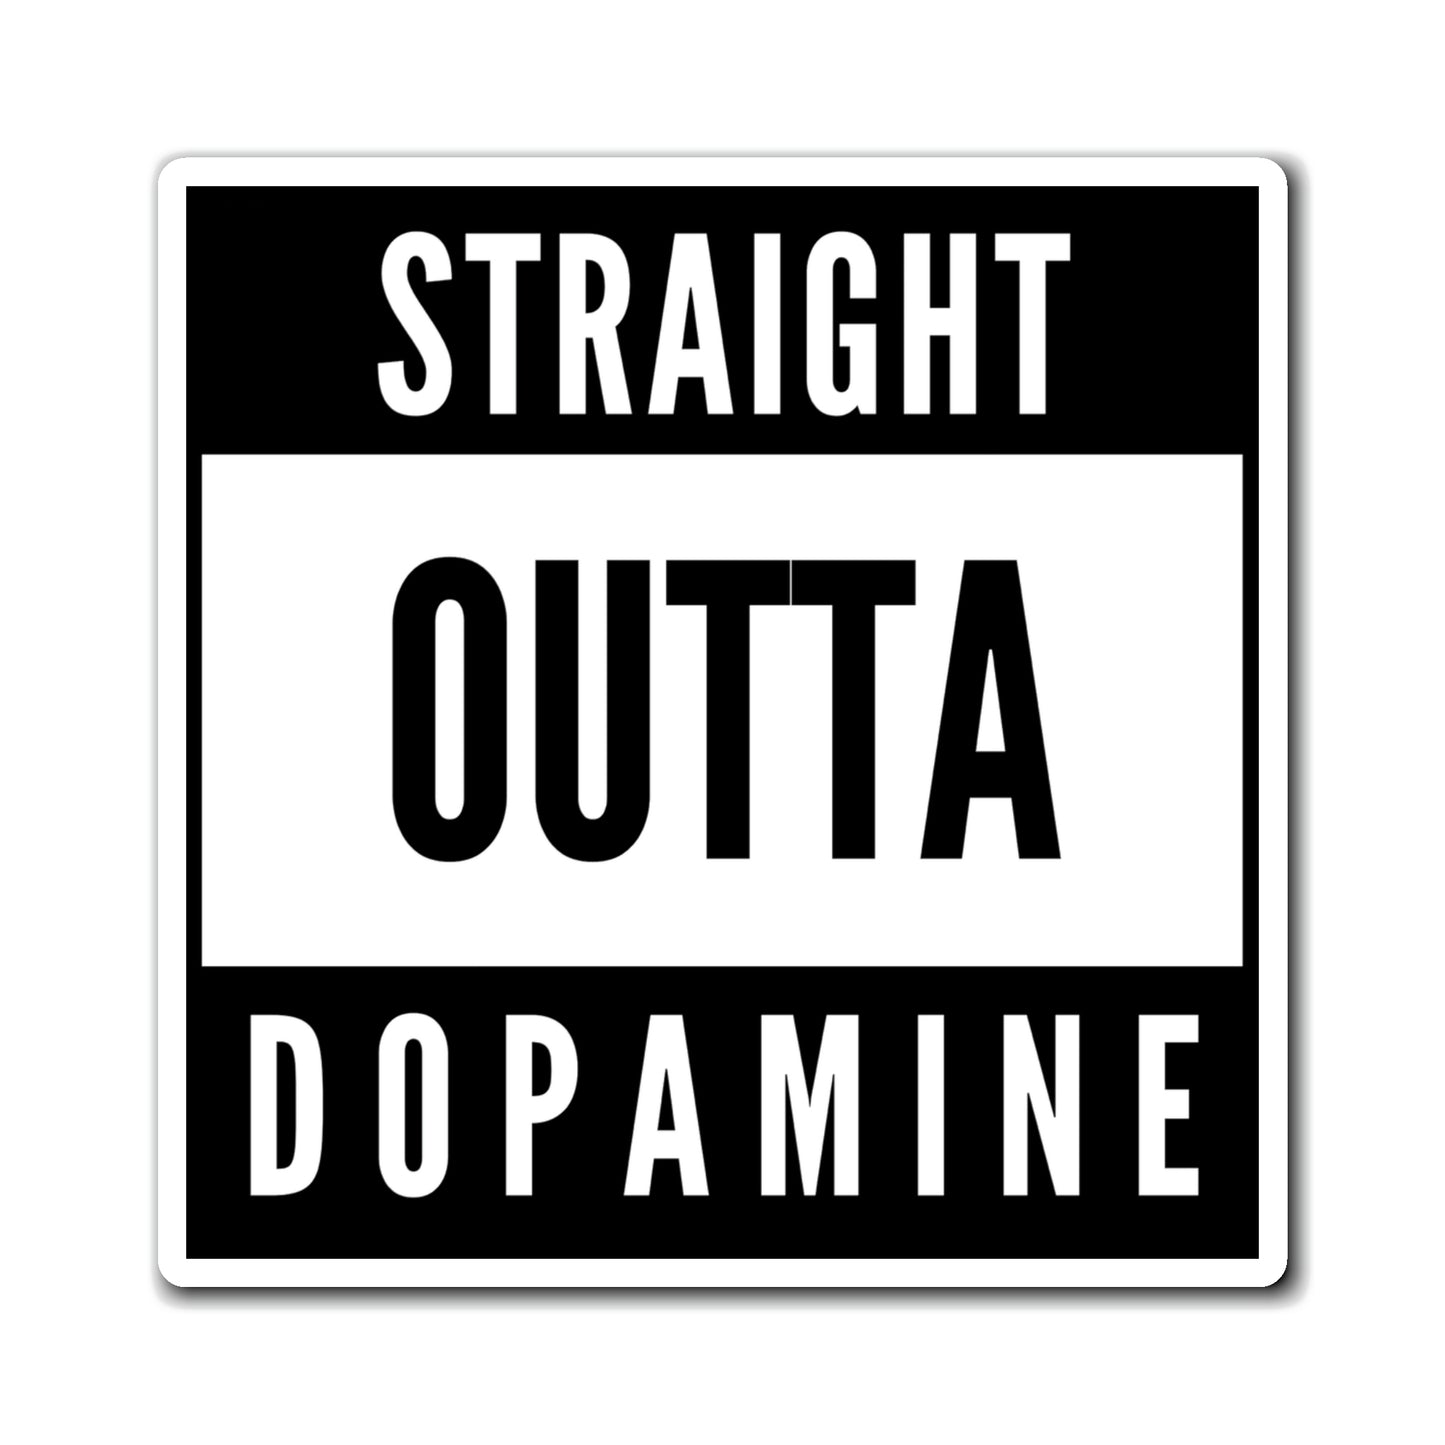 "Straight Outta Dopamine" Square Magnets